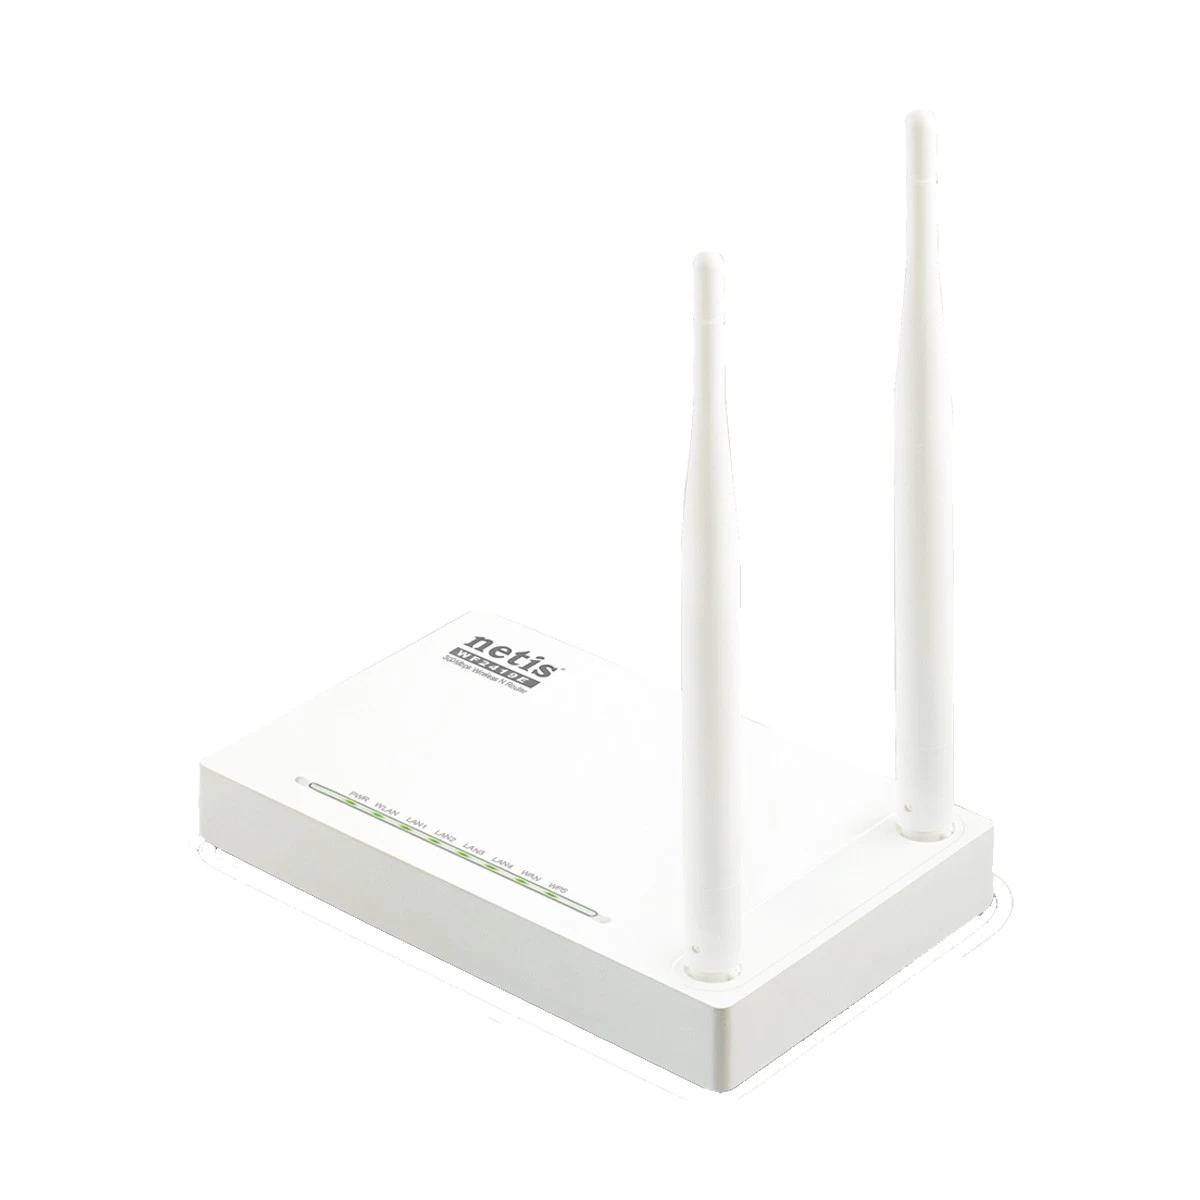 Netis WF2419E 300 Mbps Ethernet Single-Band Wi-Fi Router